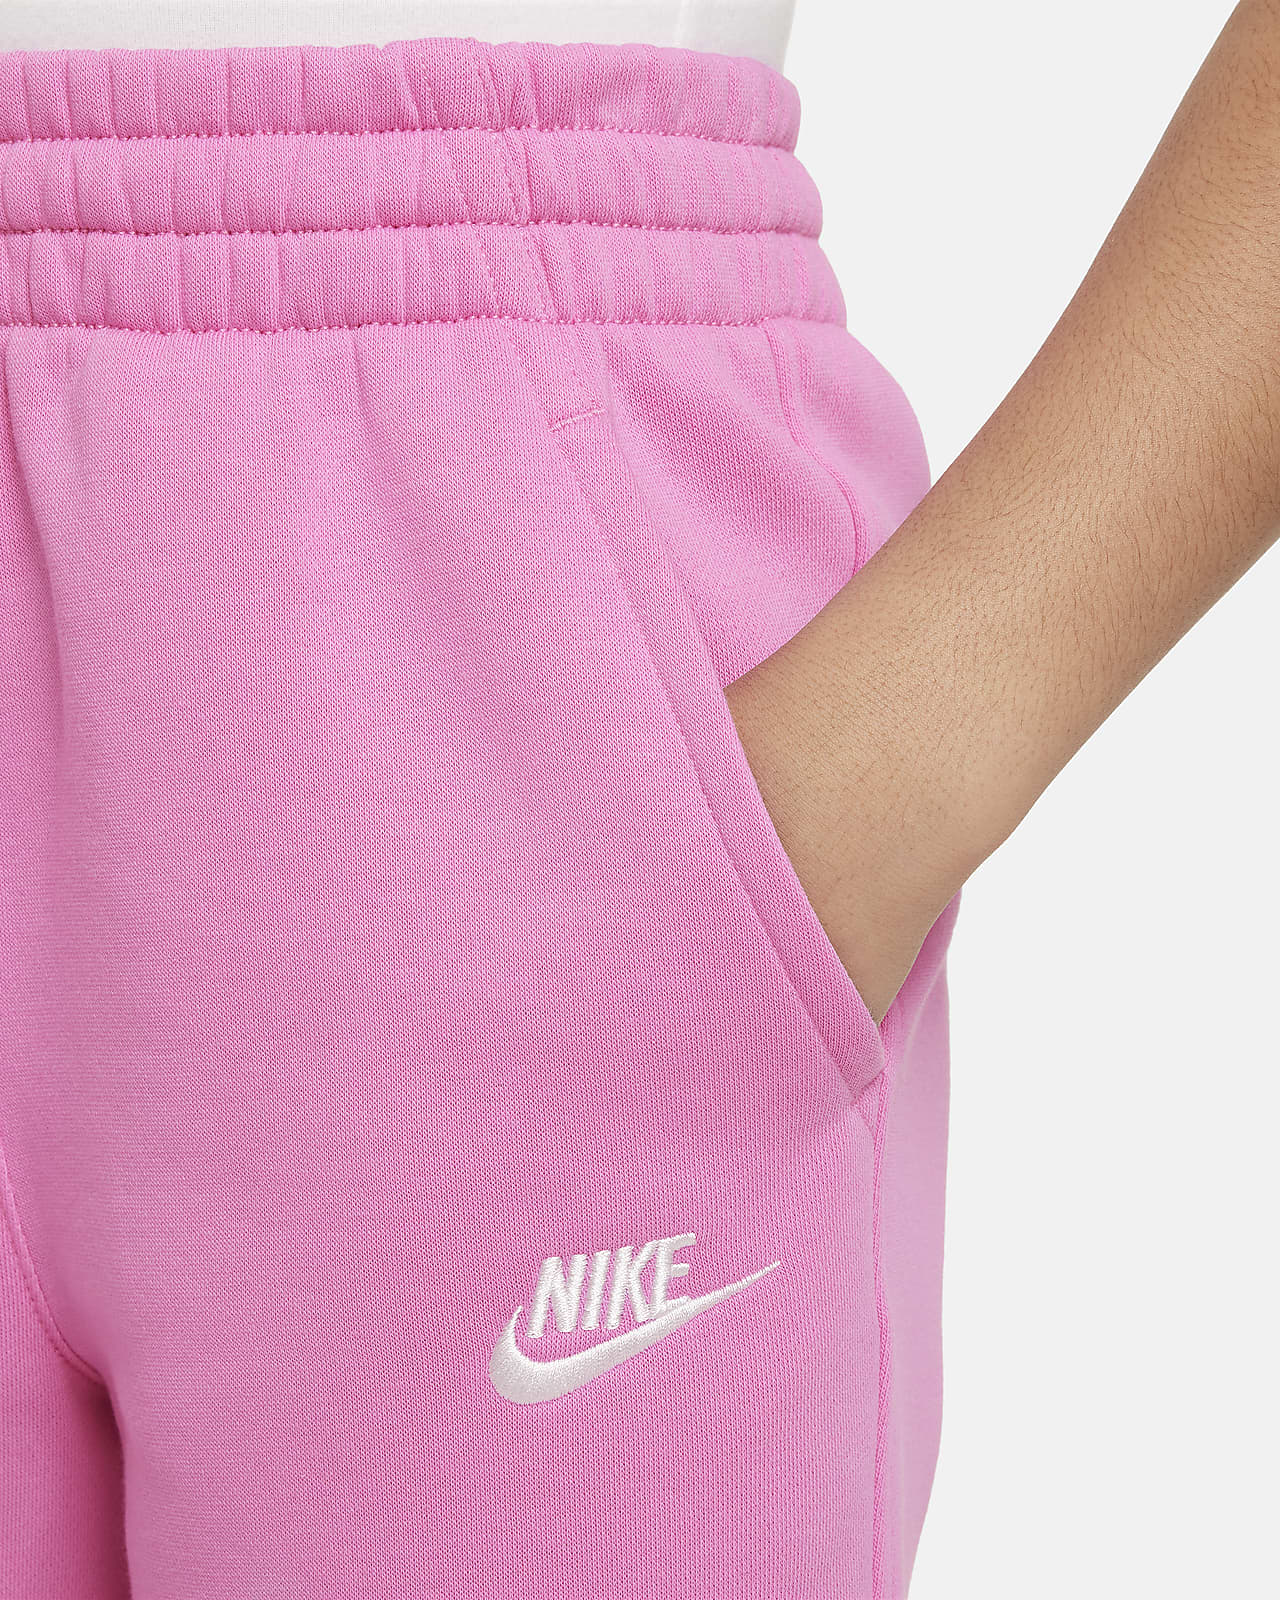 Nike Sportswear Big Kids' (Girls') Pants.